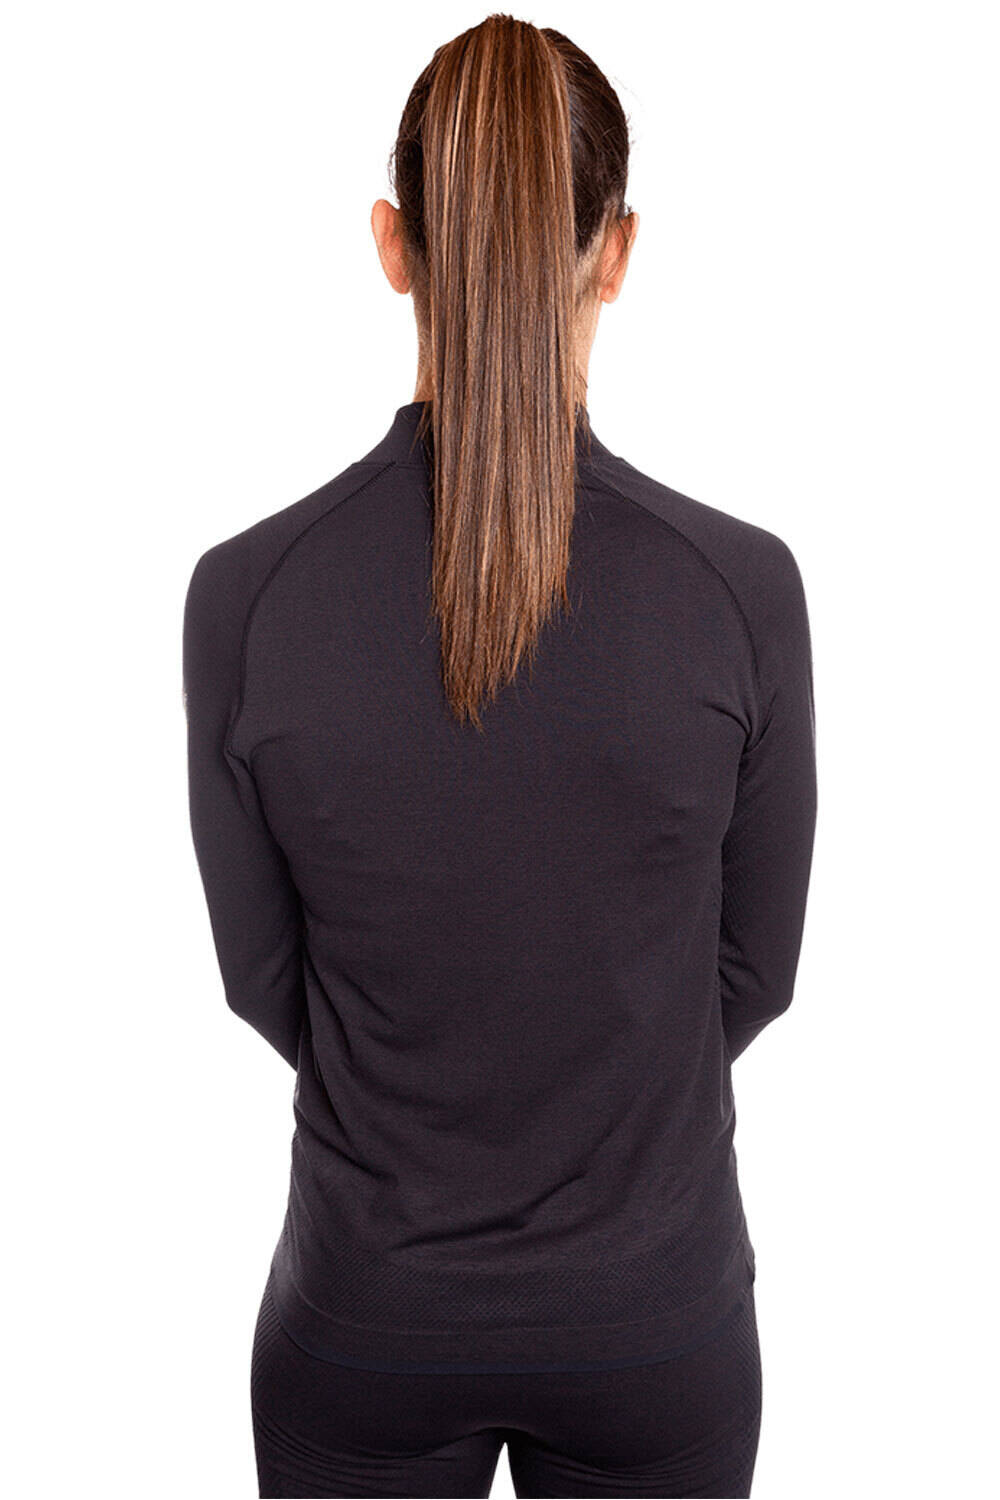 Trango camiseta térmica manga larga mujer PULLOVER INTERIOR LOUDET vista trasera